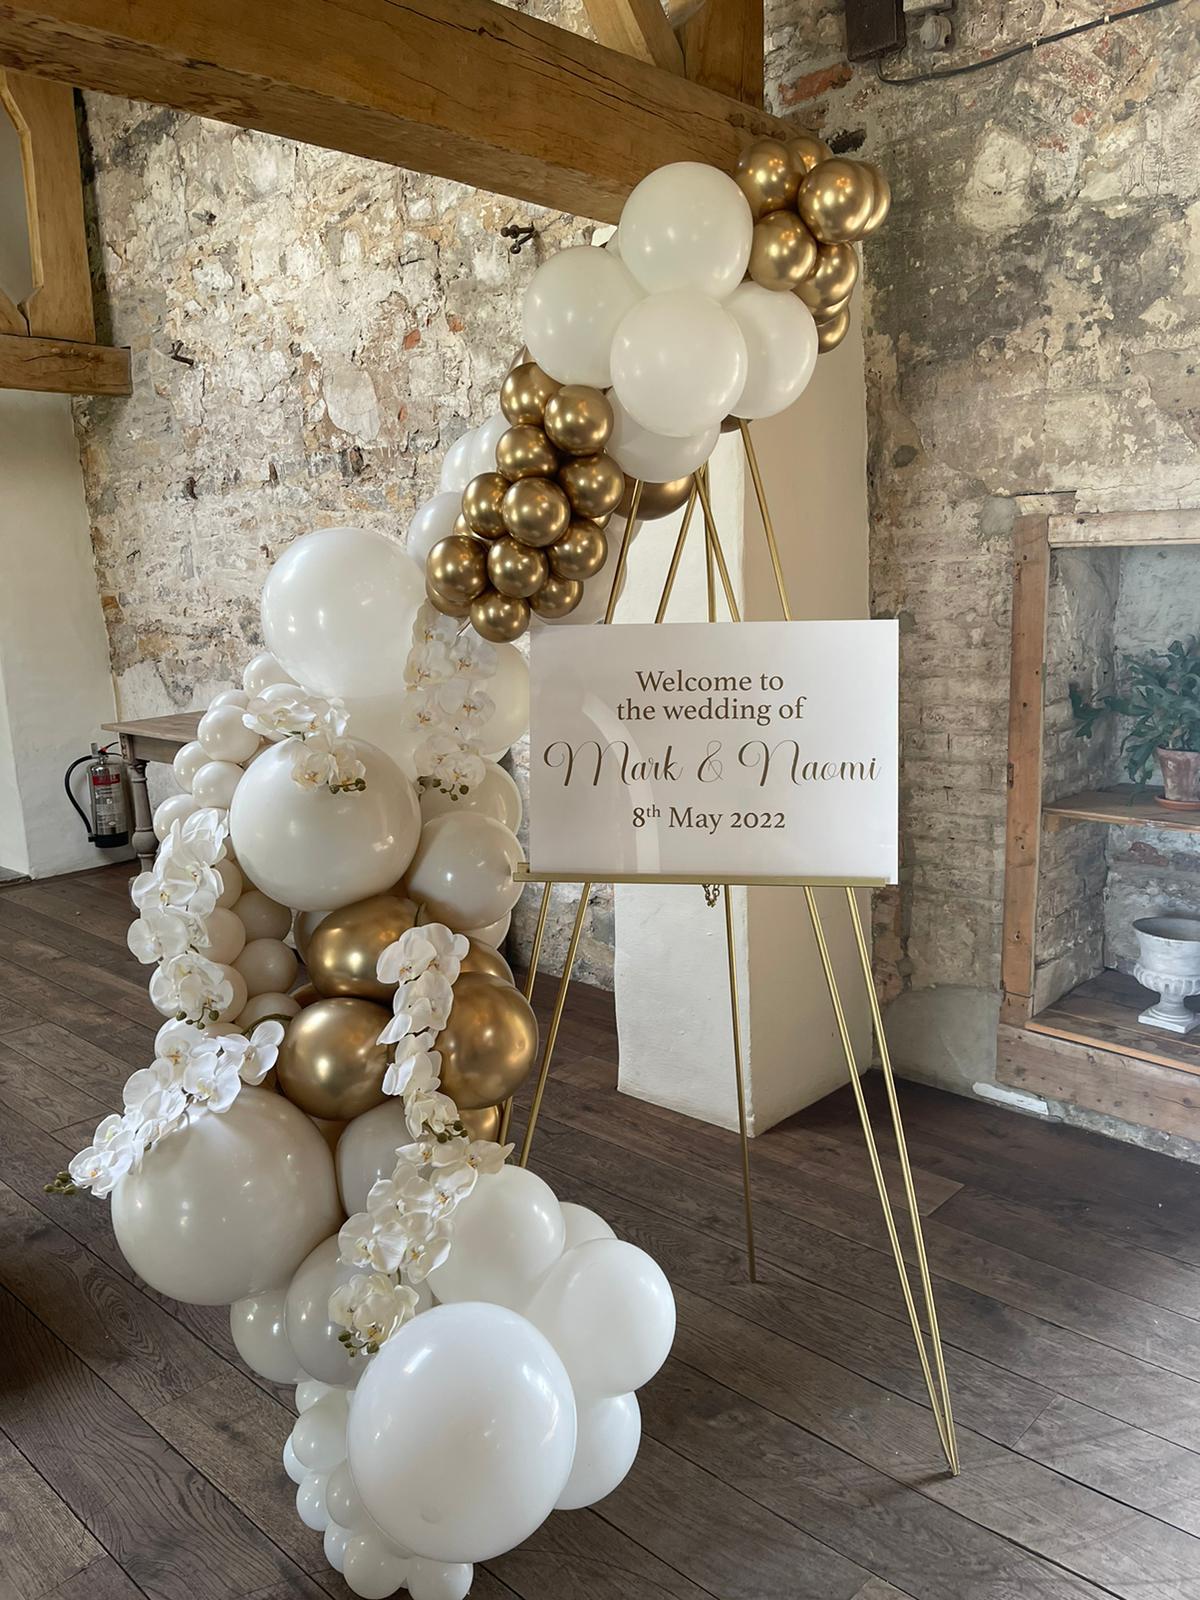 Balloon installation wedding and events decor inspiration